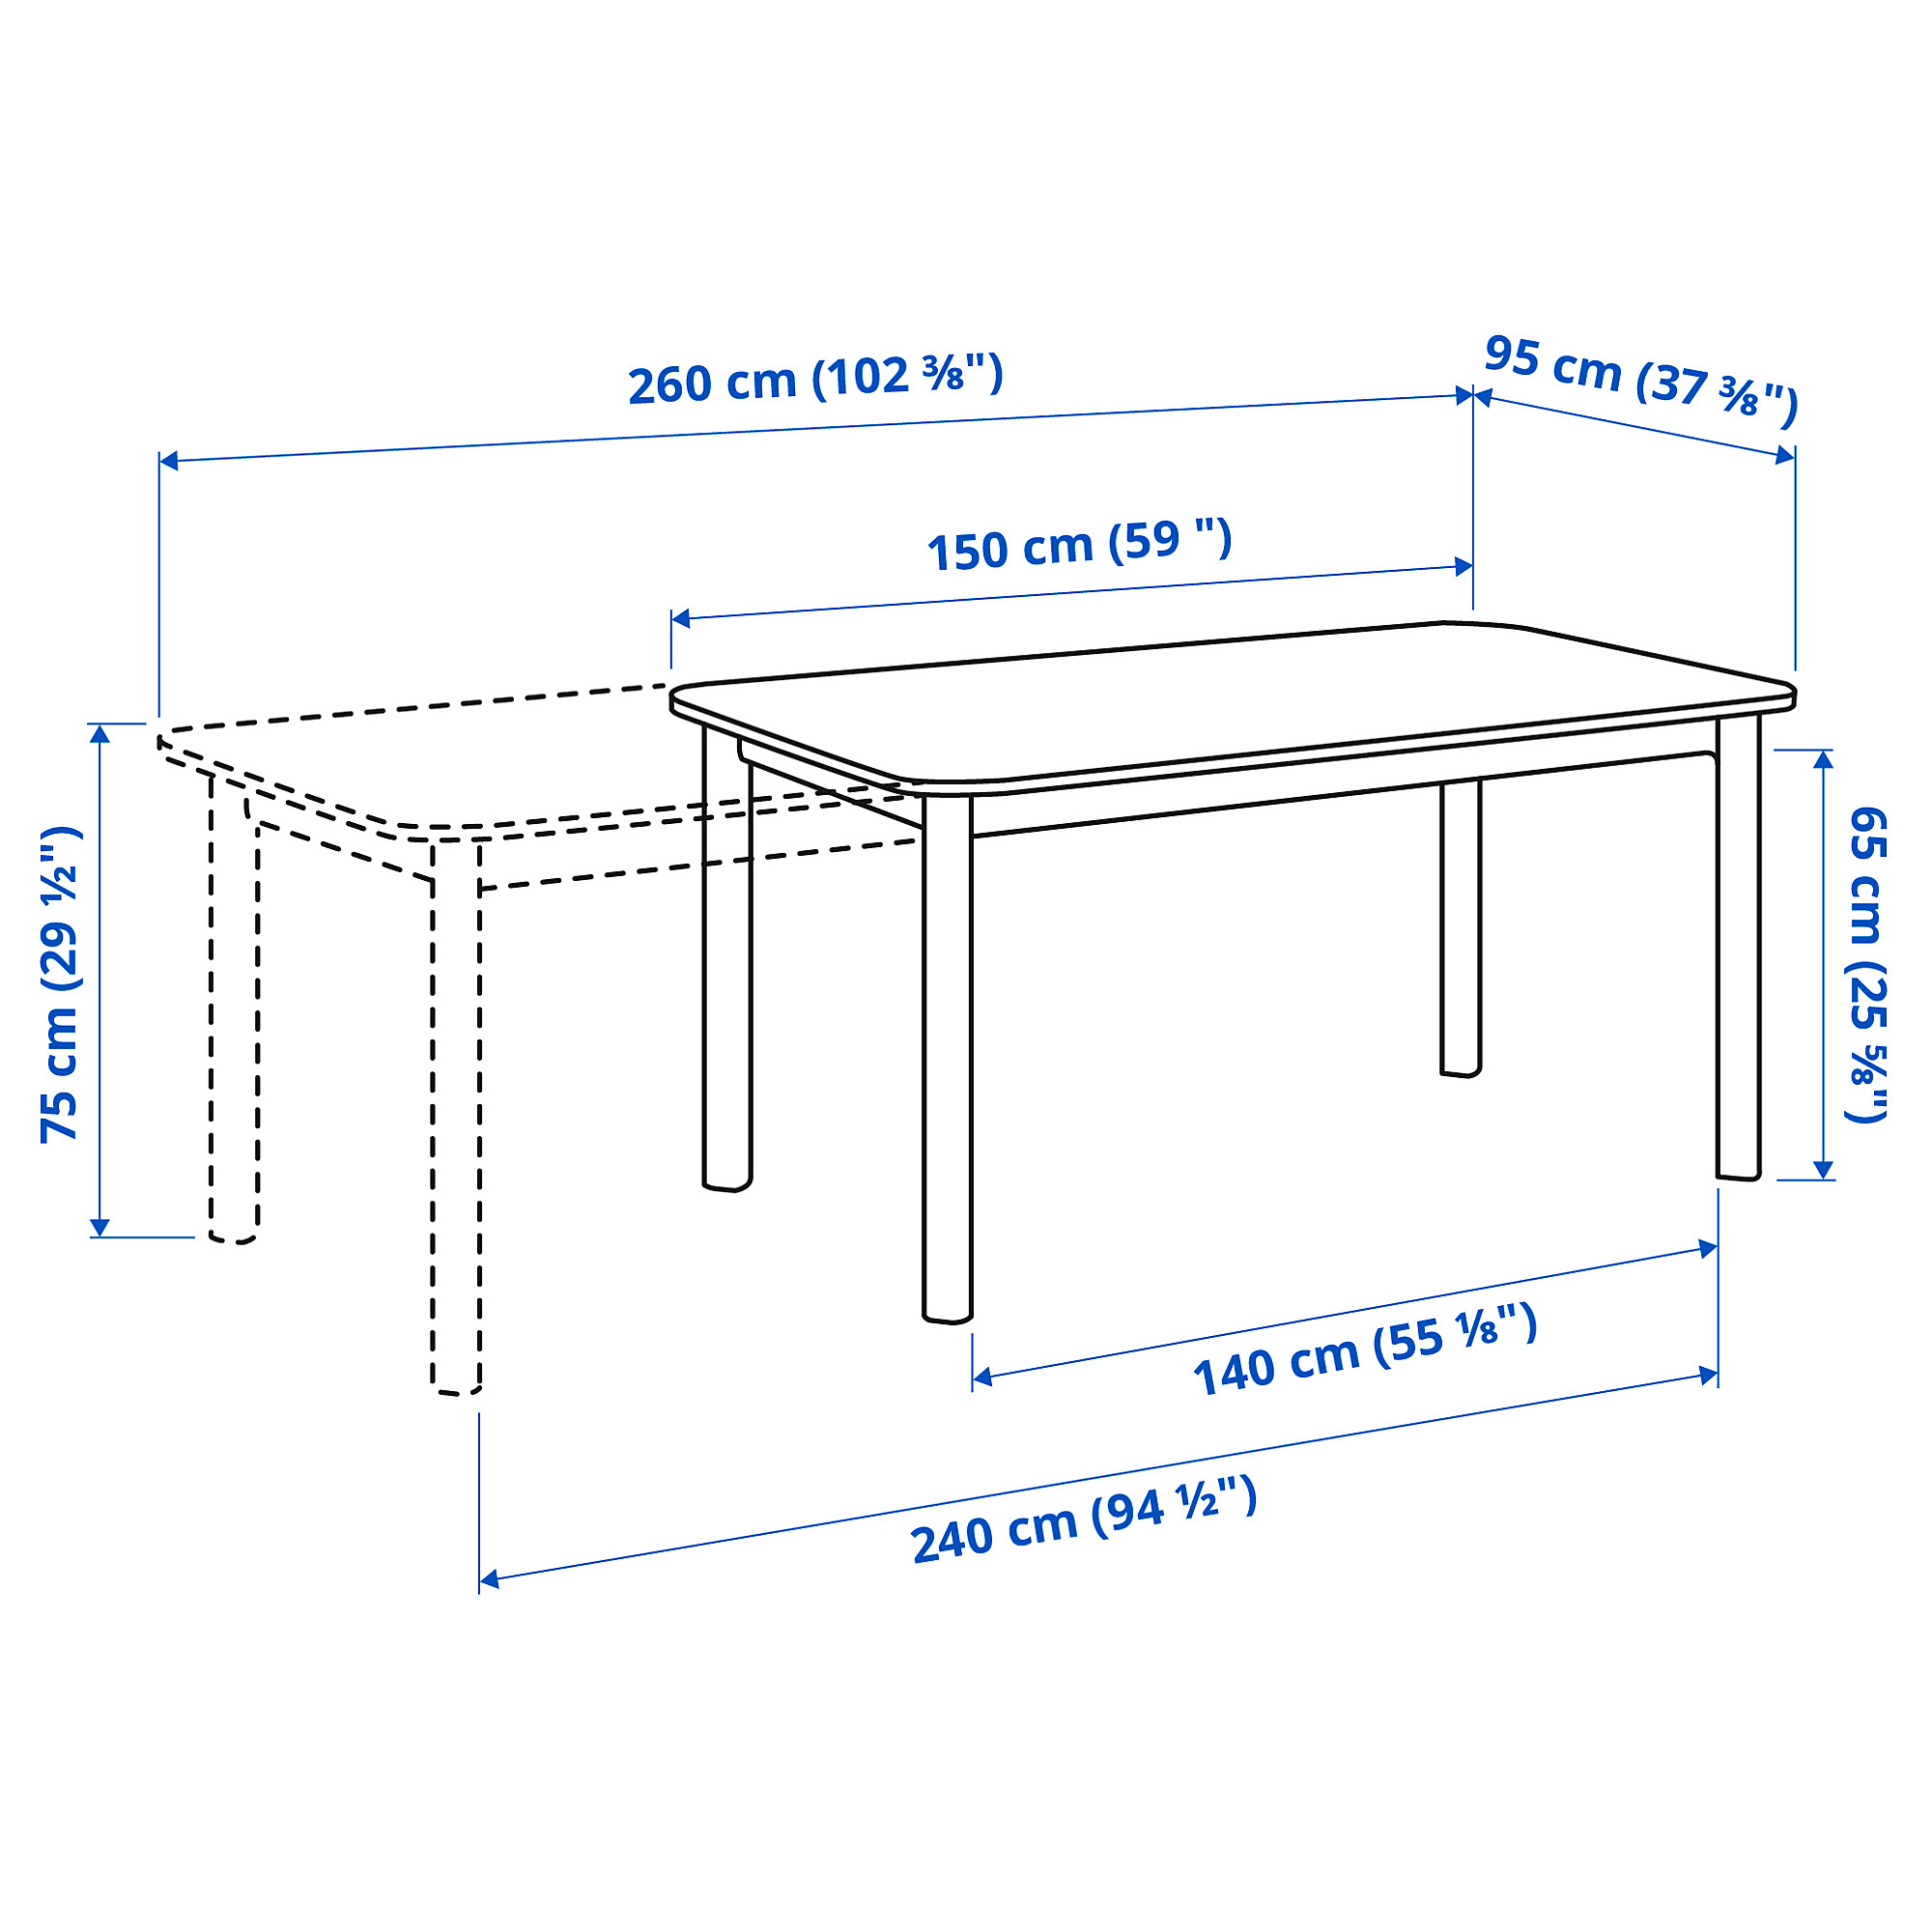 STRANDTORP/UDMUND 餐桌附4張餐椅